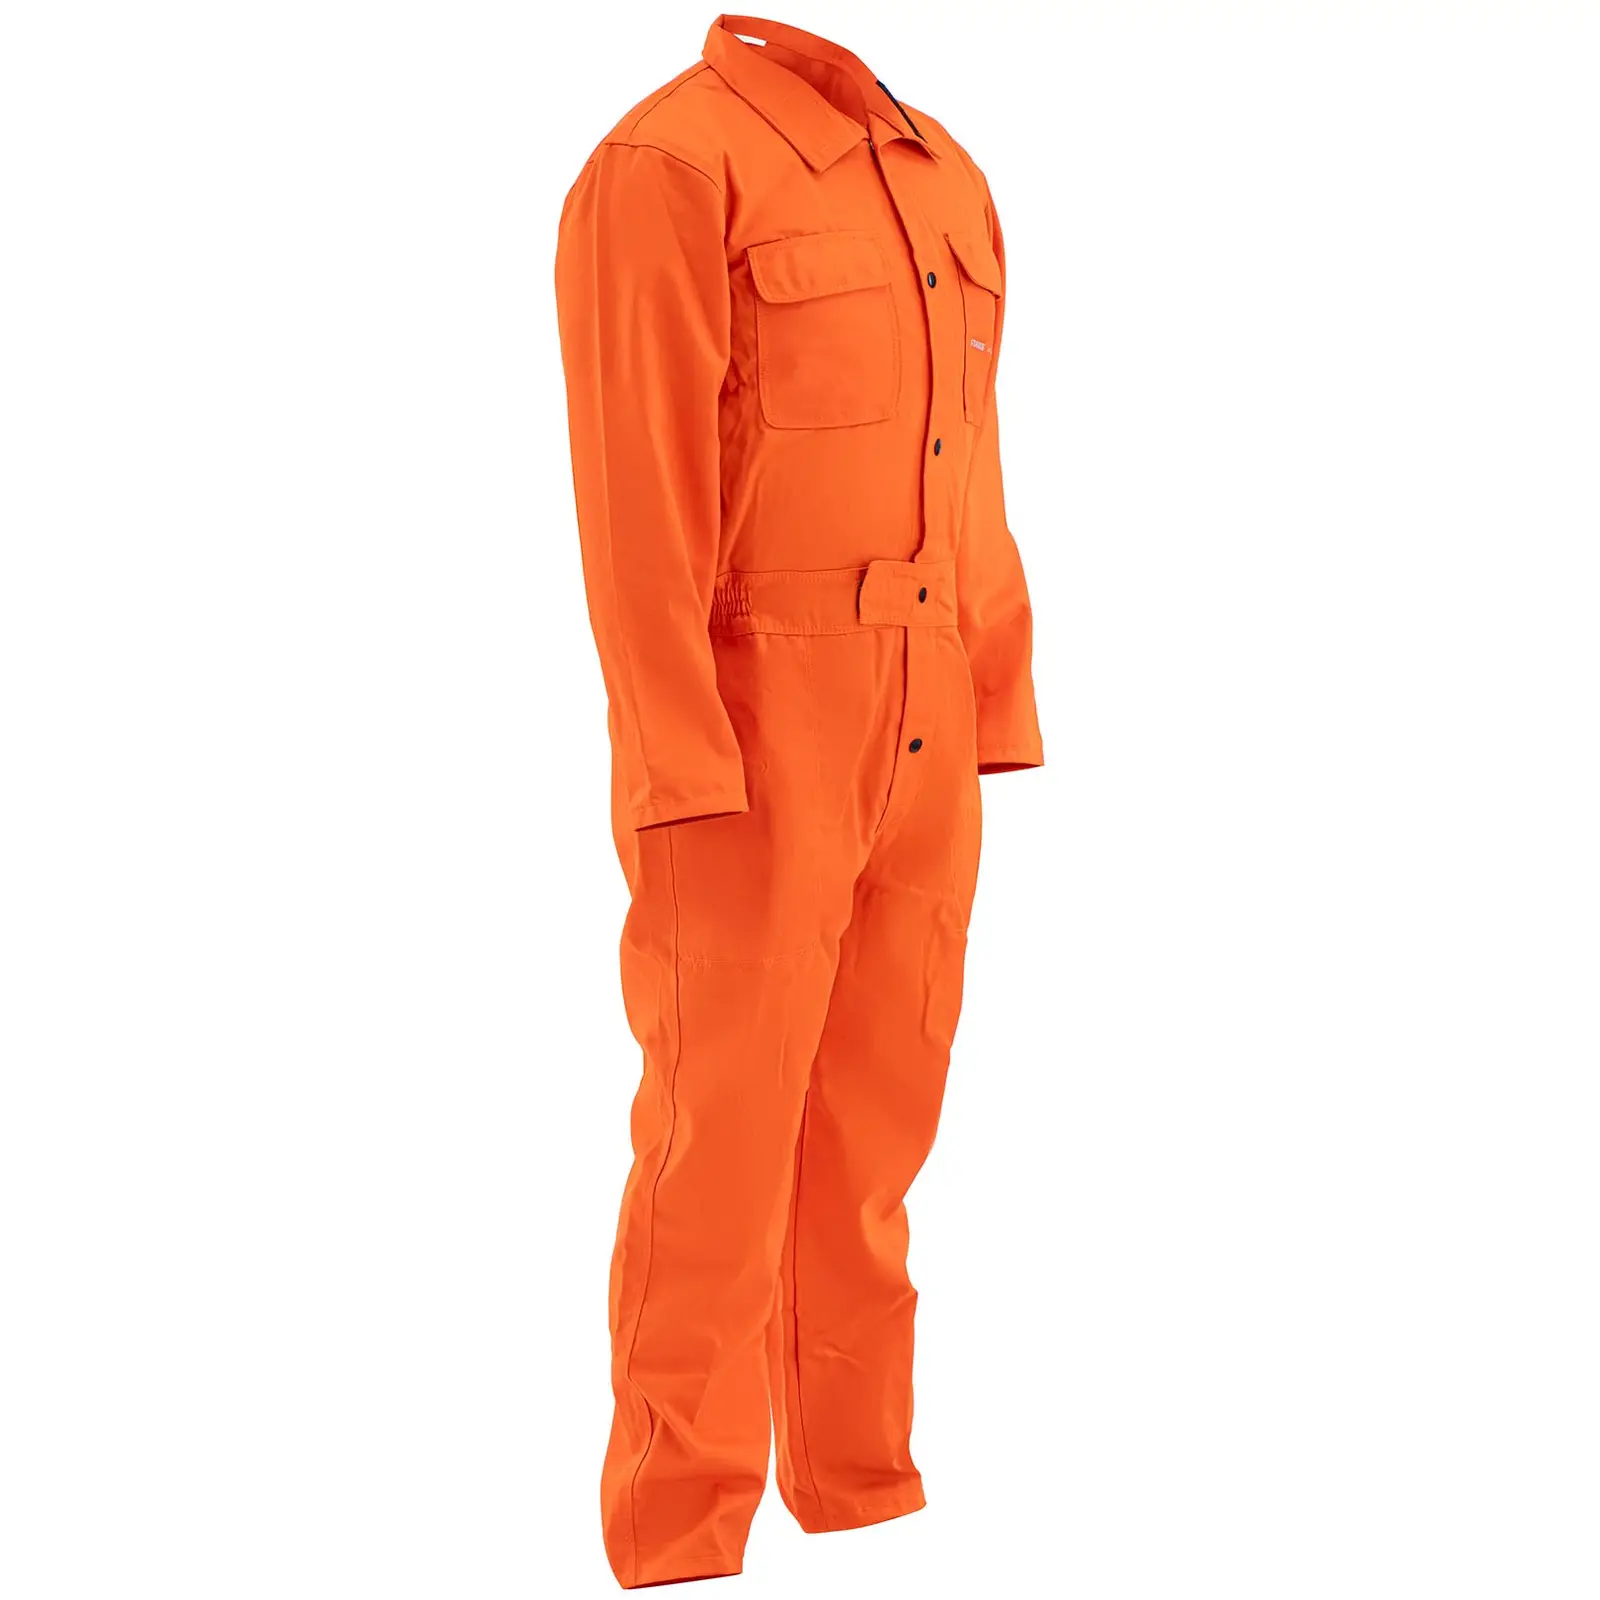 Welding Overalls - Size XL - Orange